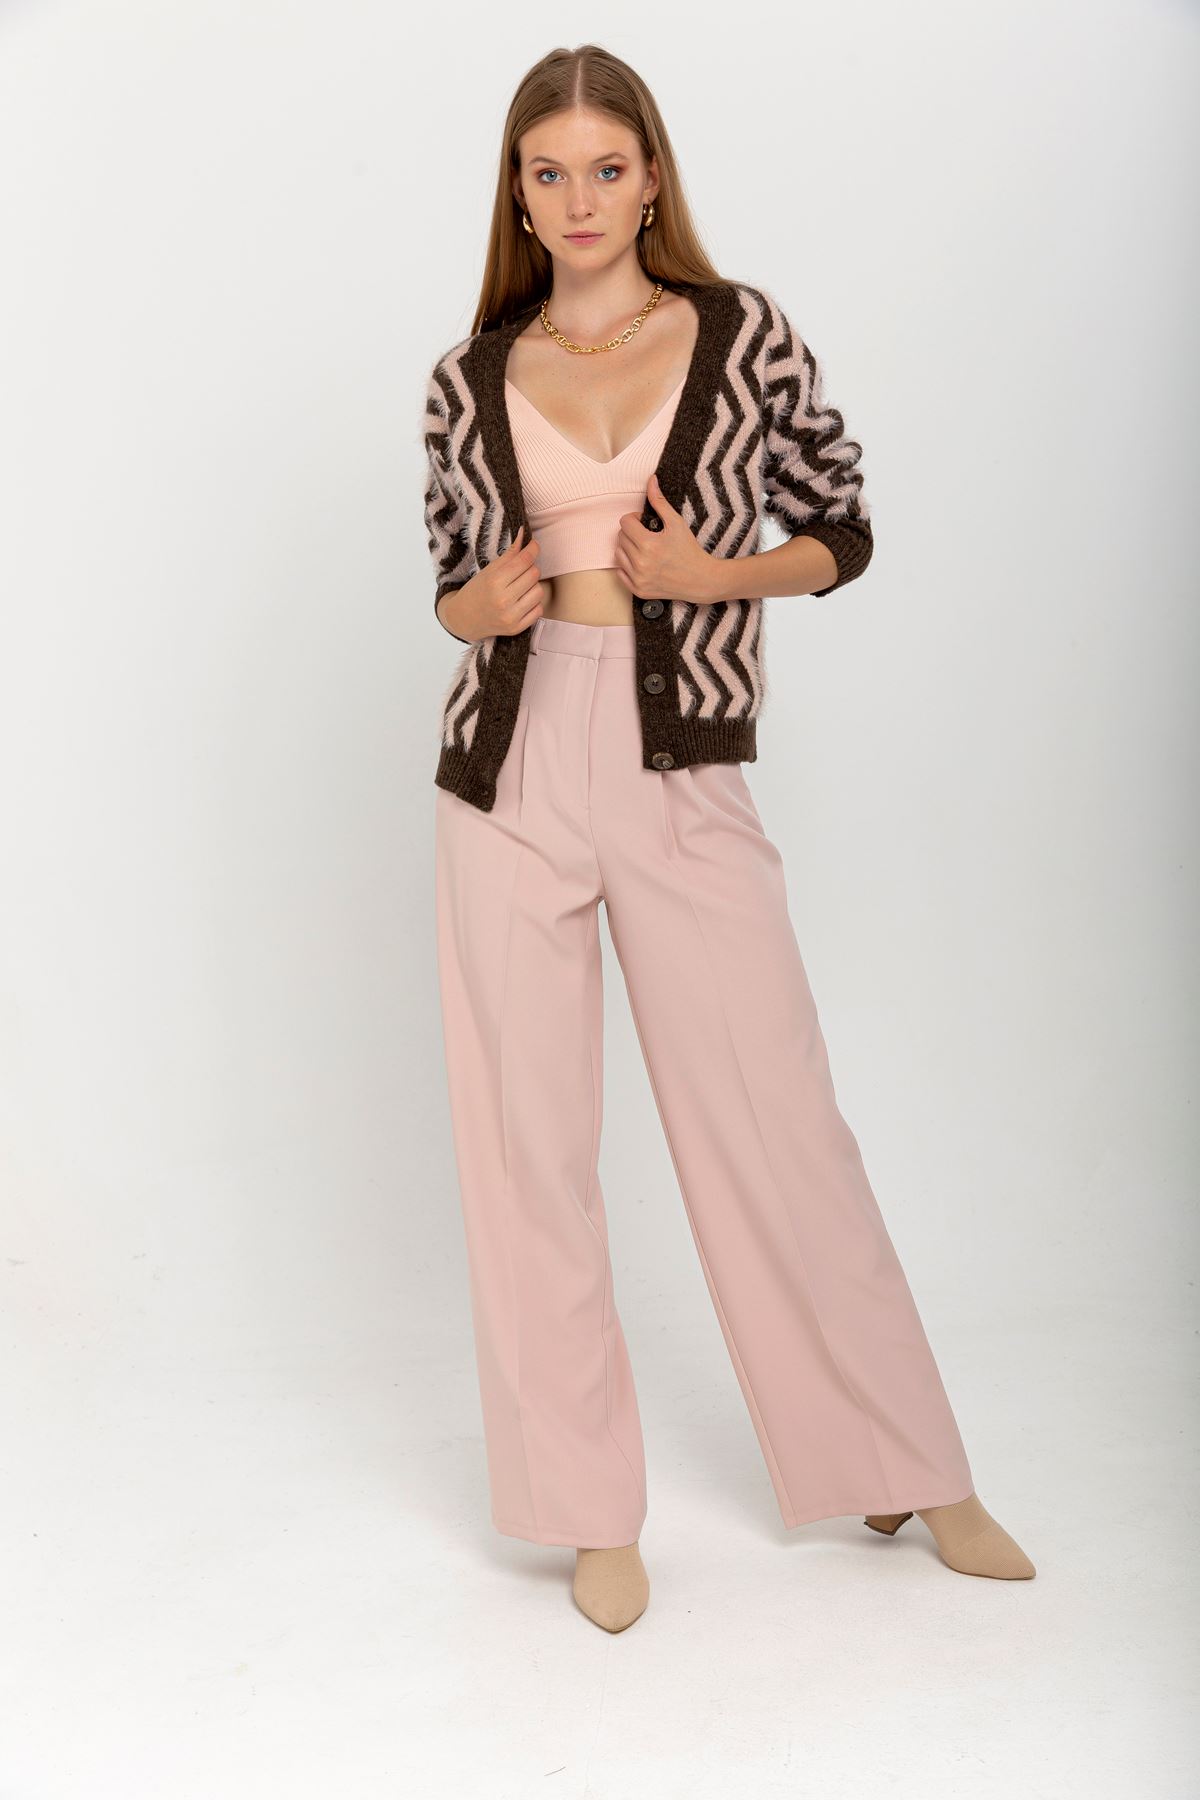 Knitwear Fabric Long Sleeve V-Neck Short Fringed Women Cardigan - Brown